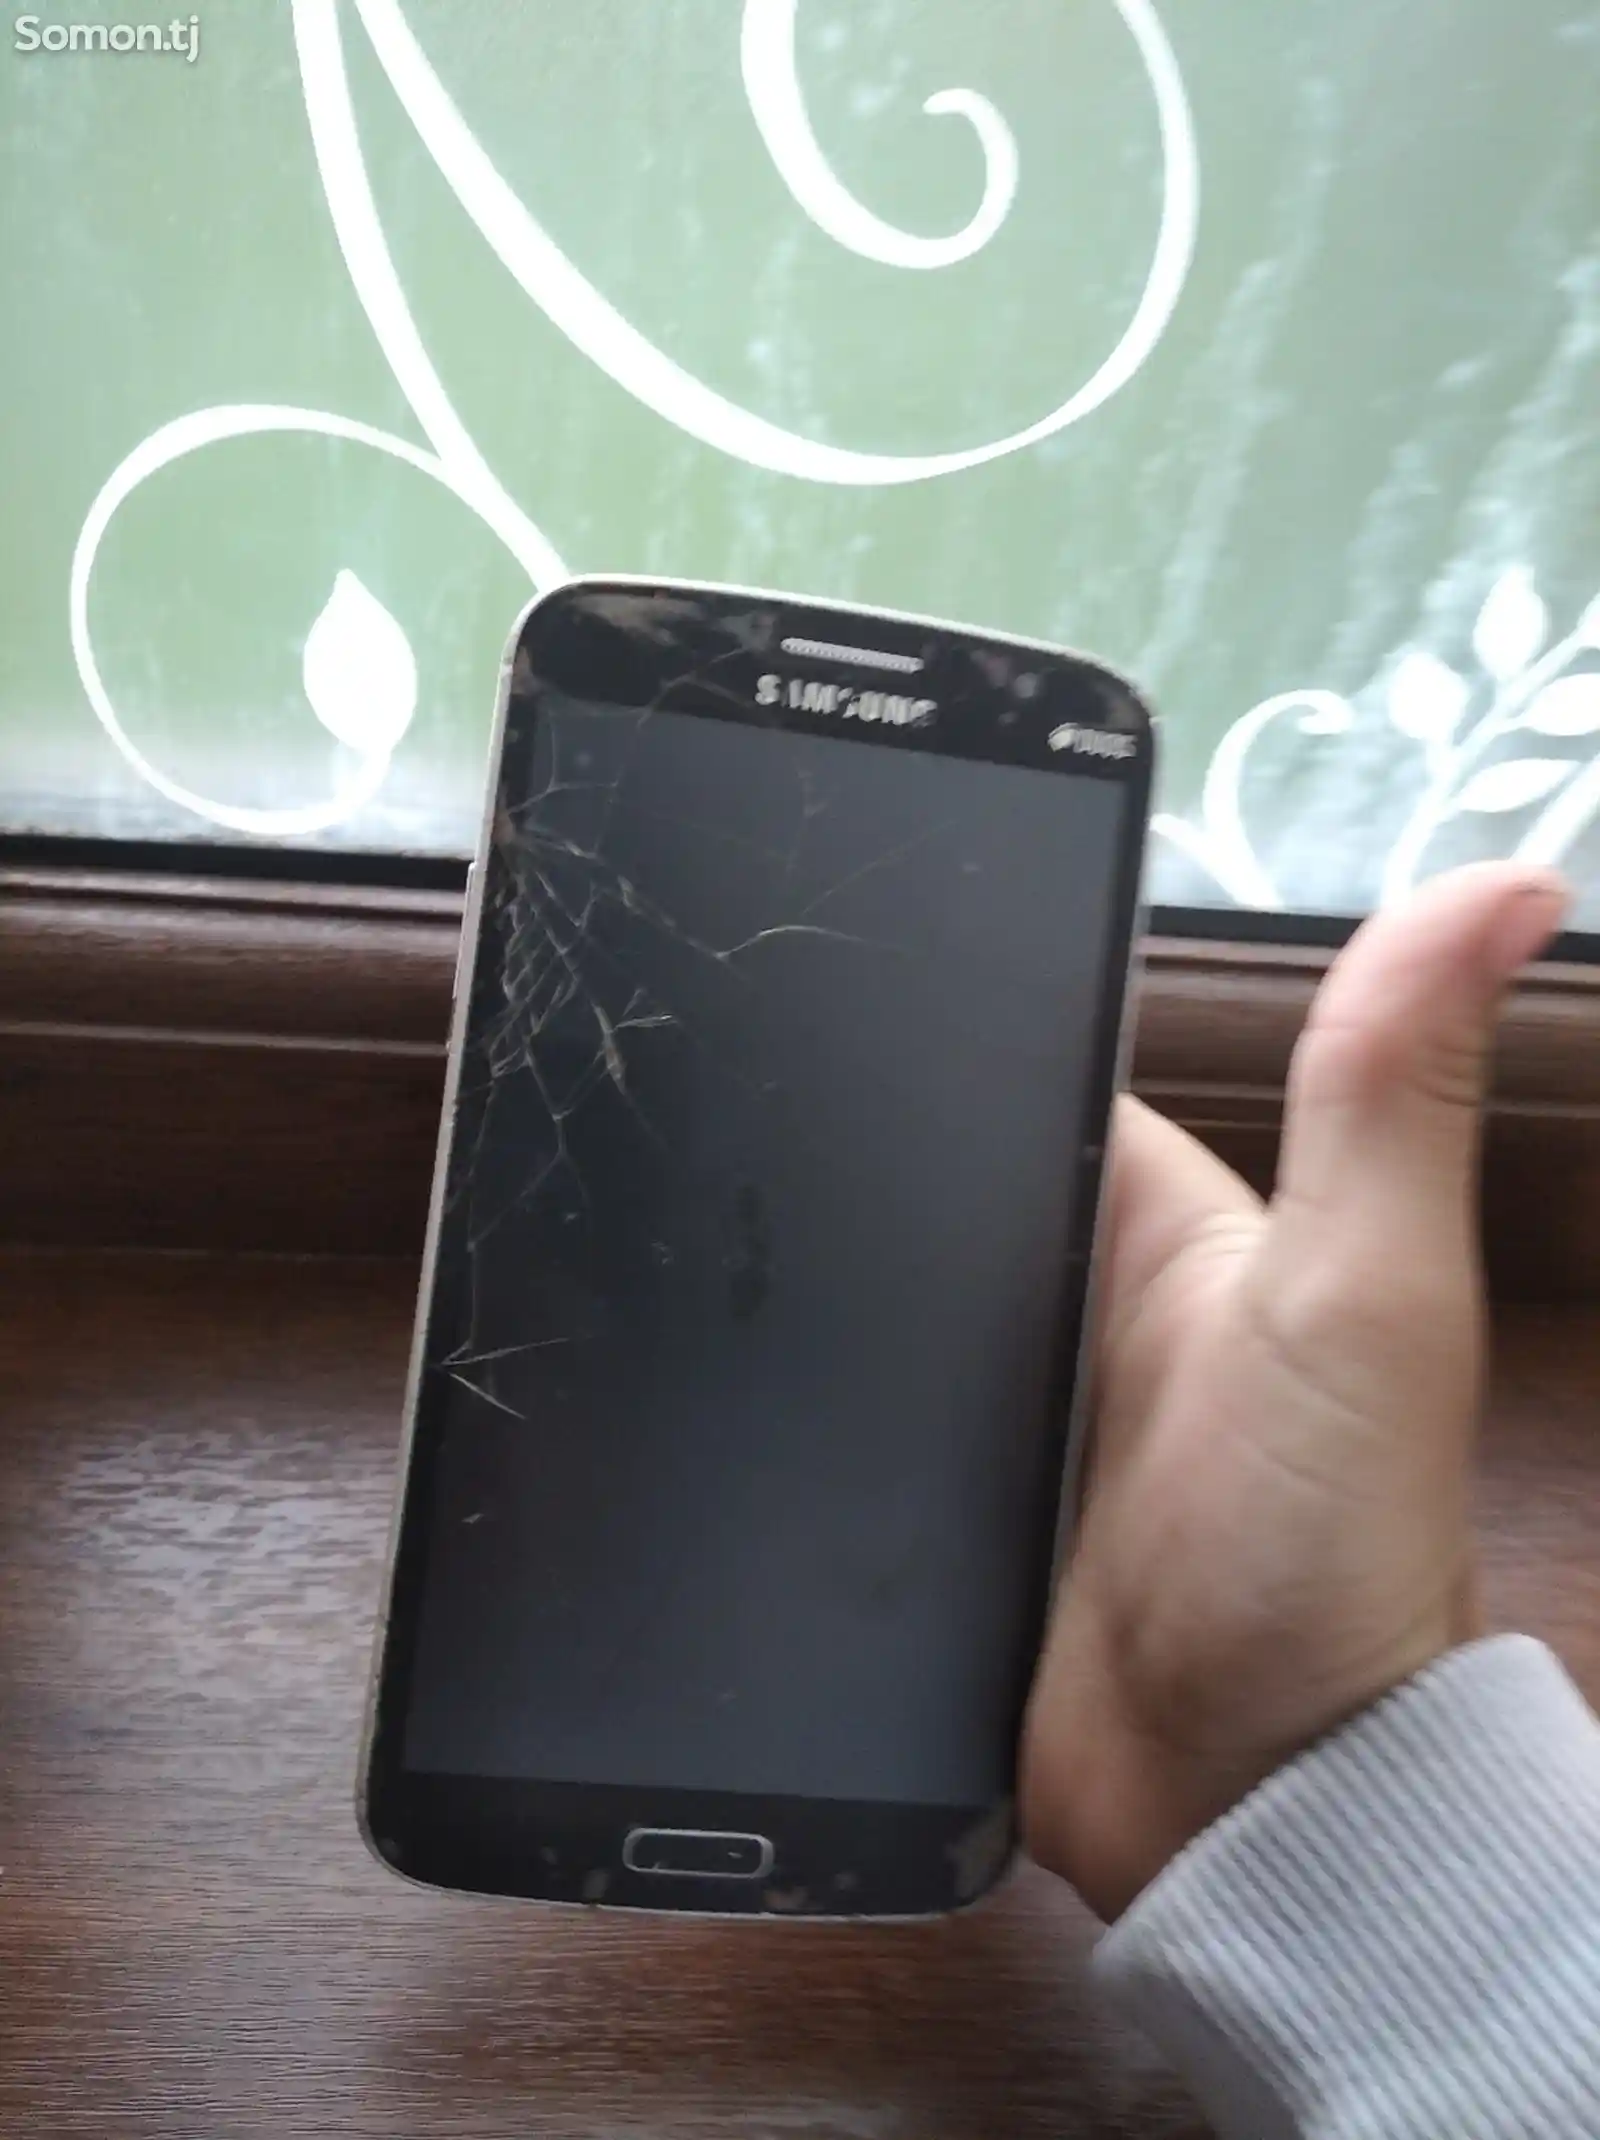 Samsung Galaxy Grand 2-1